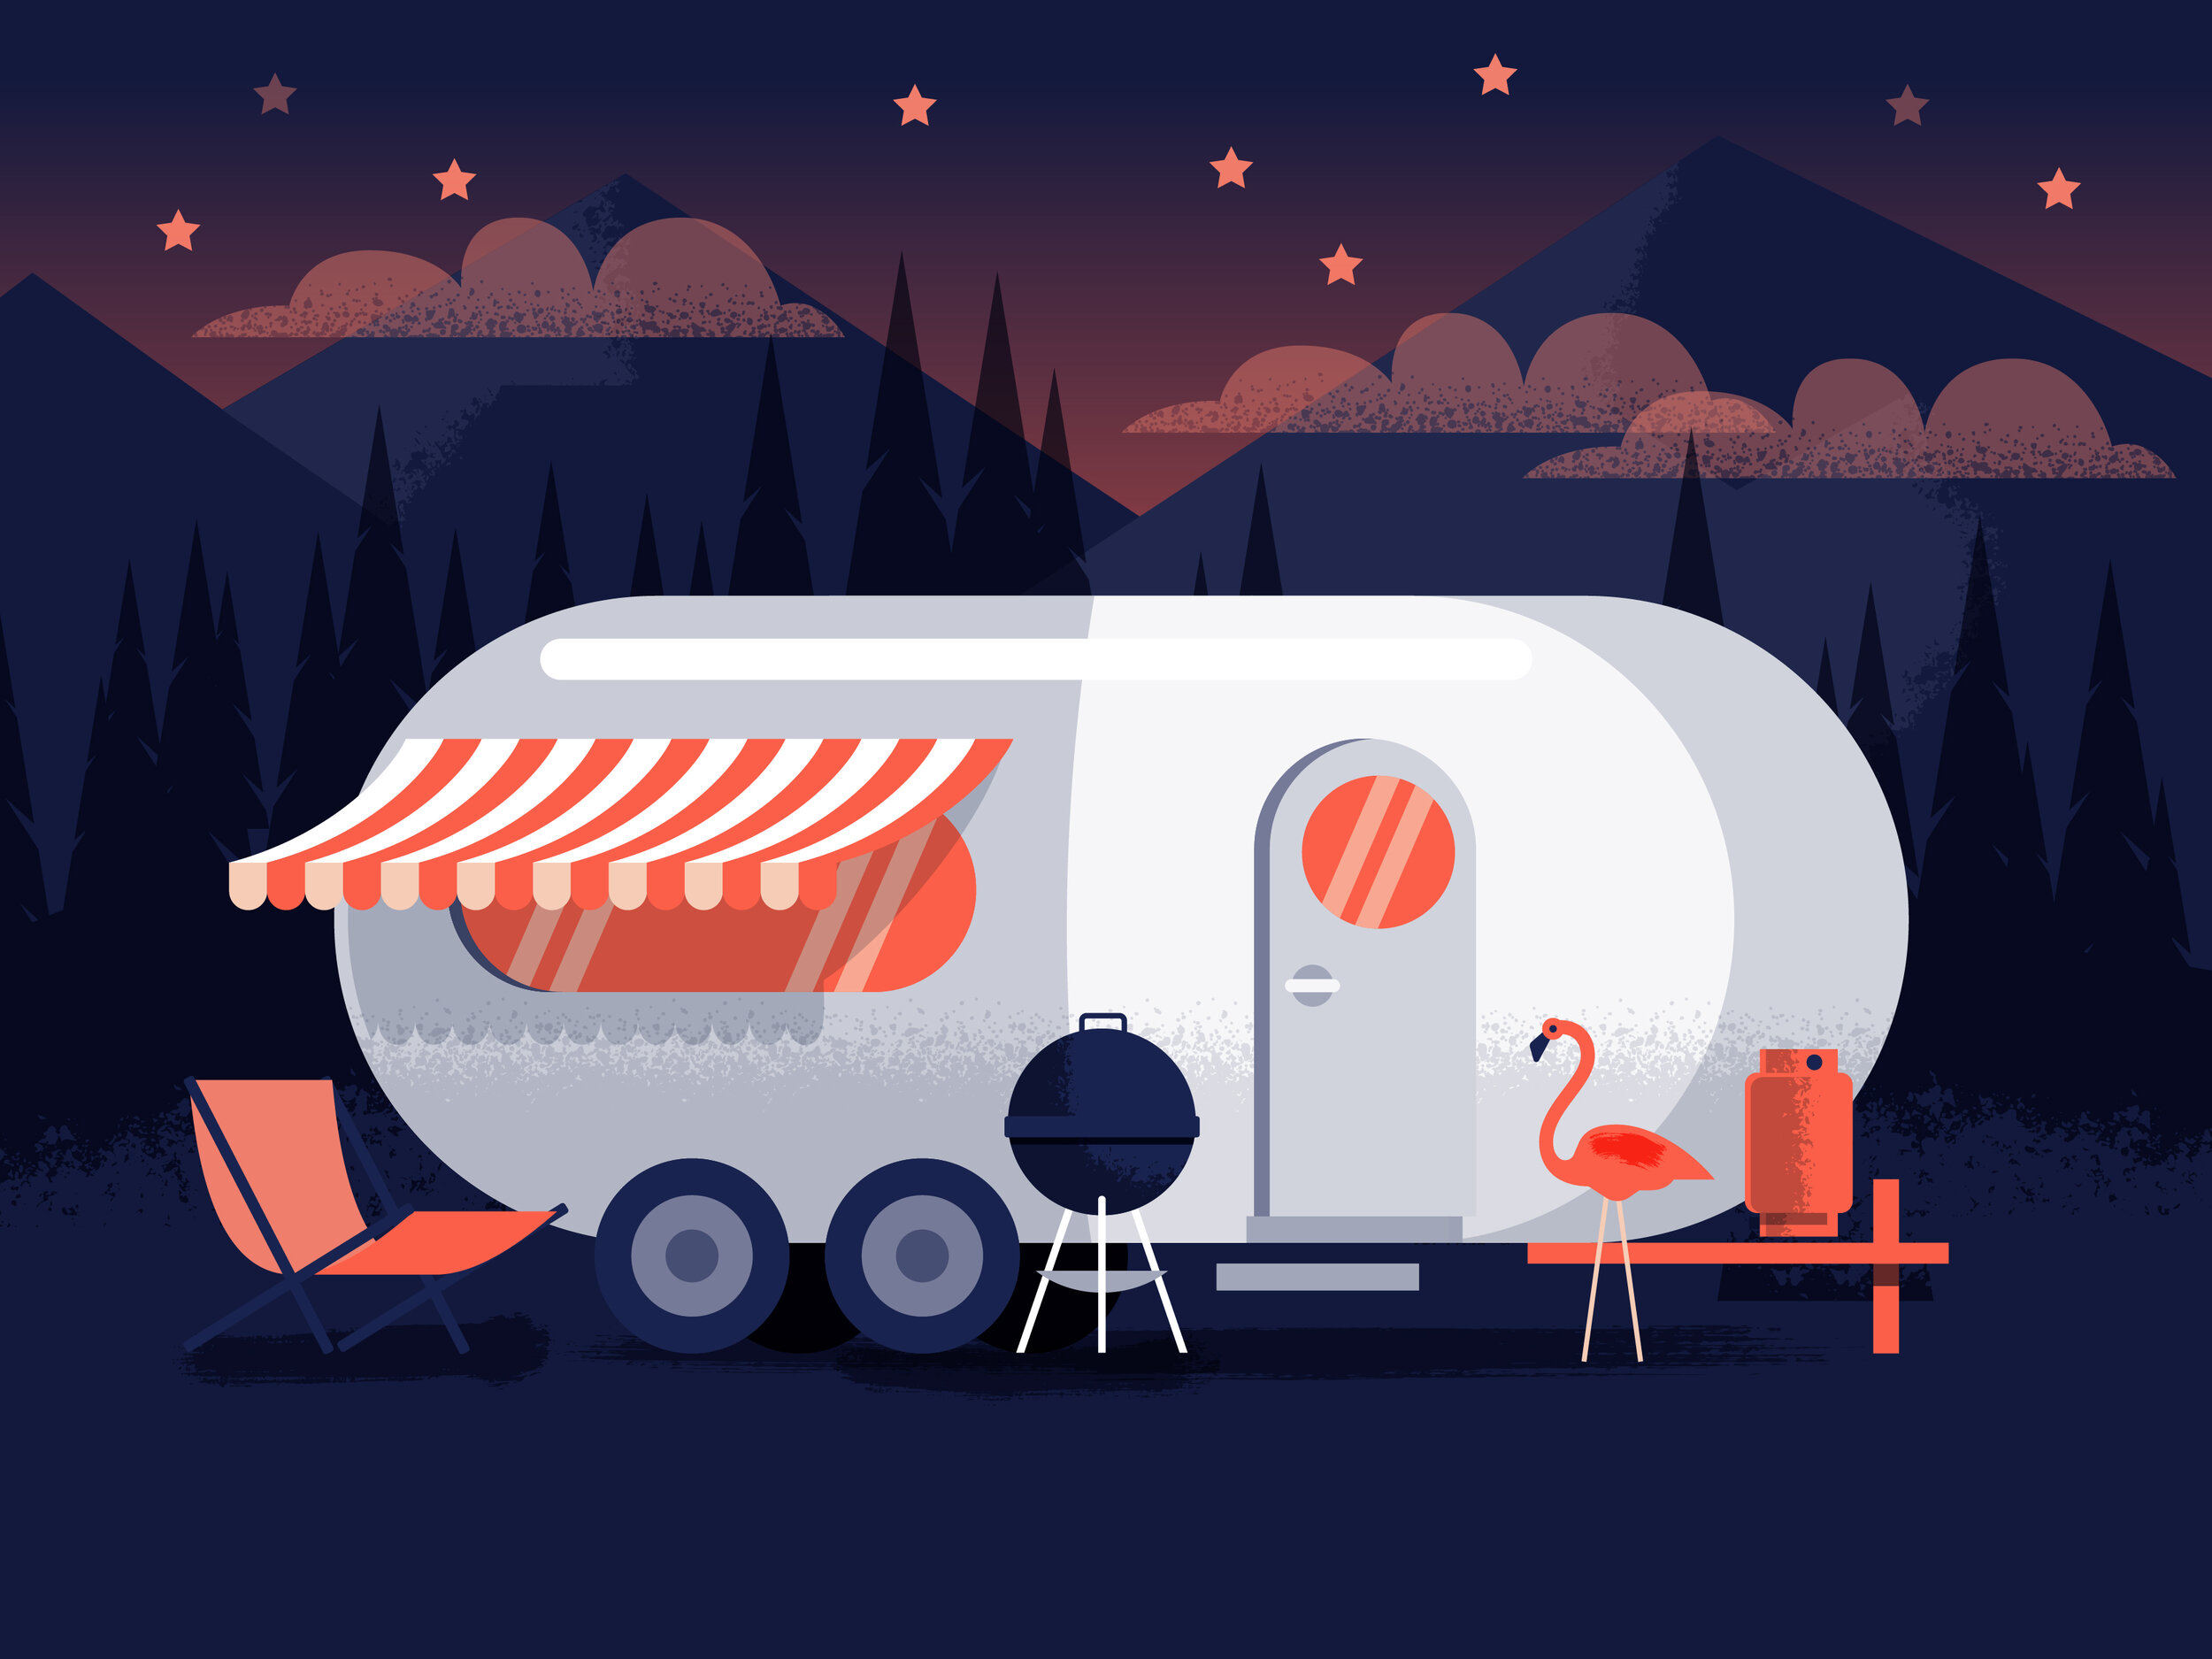 camper_illustration-01.jpg